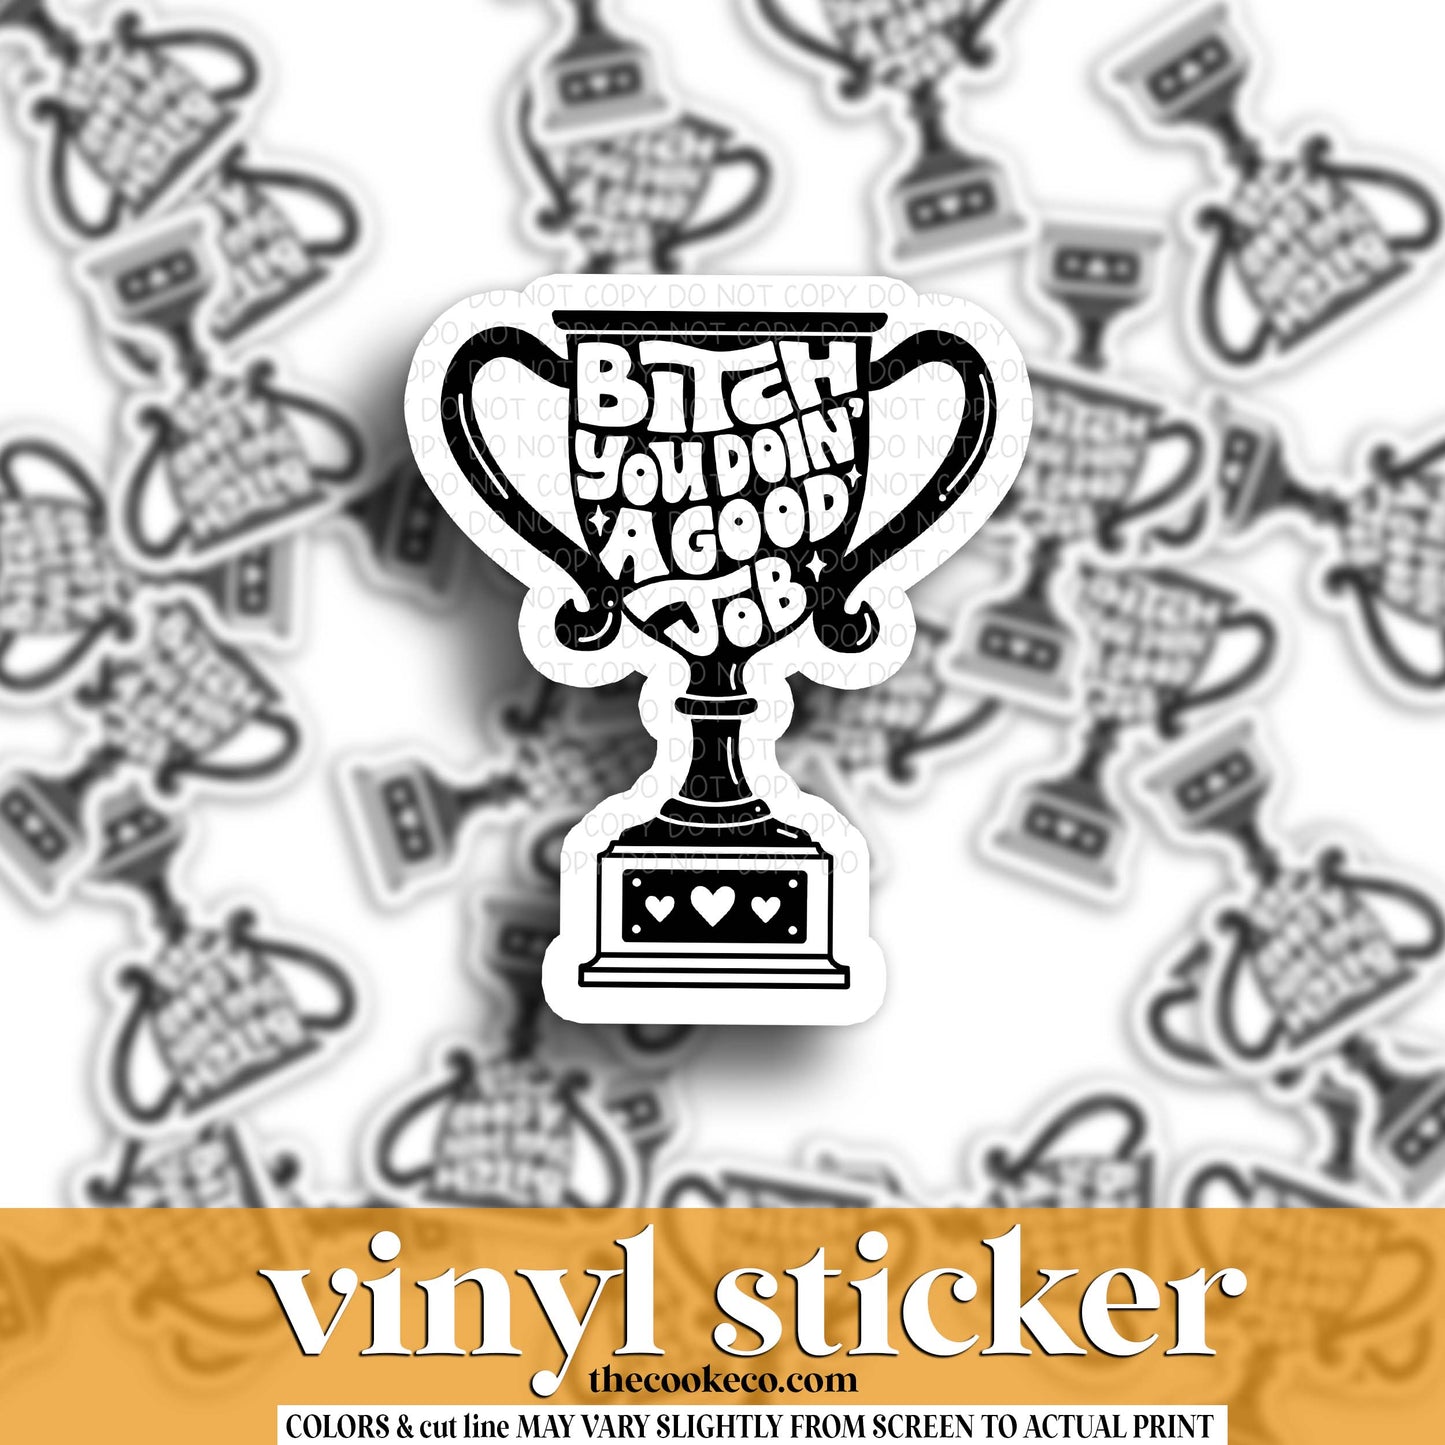 Vinyl Sticker | #V1798 - BISH YOU DOIN A GOOD JOB